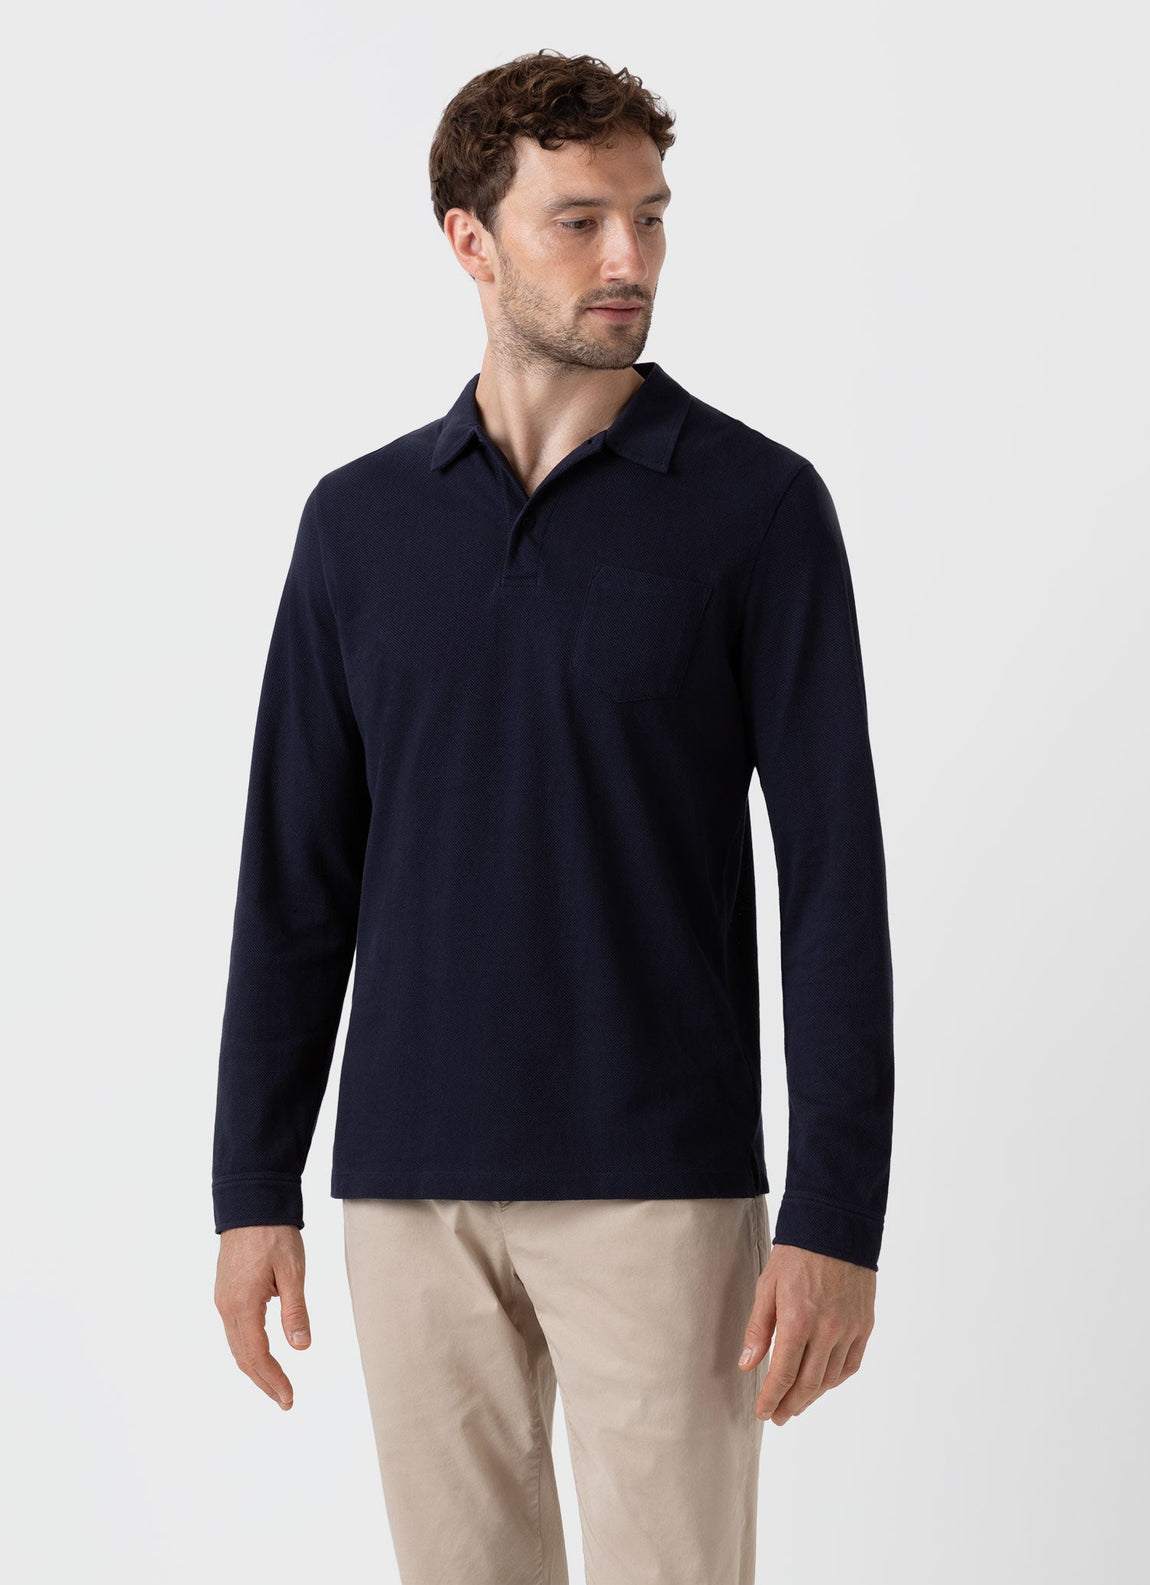 Men's Long Sleeve Riviera Polo Shirt in Navy | Sunspel